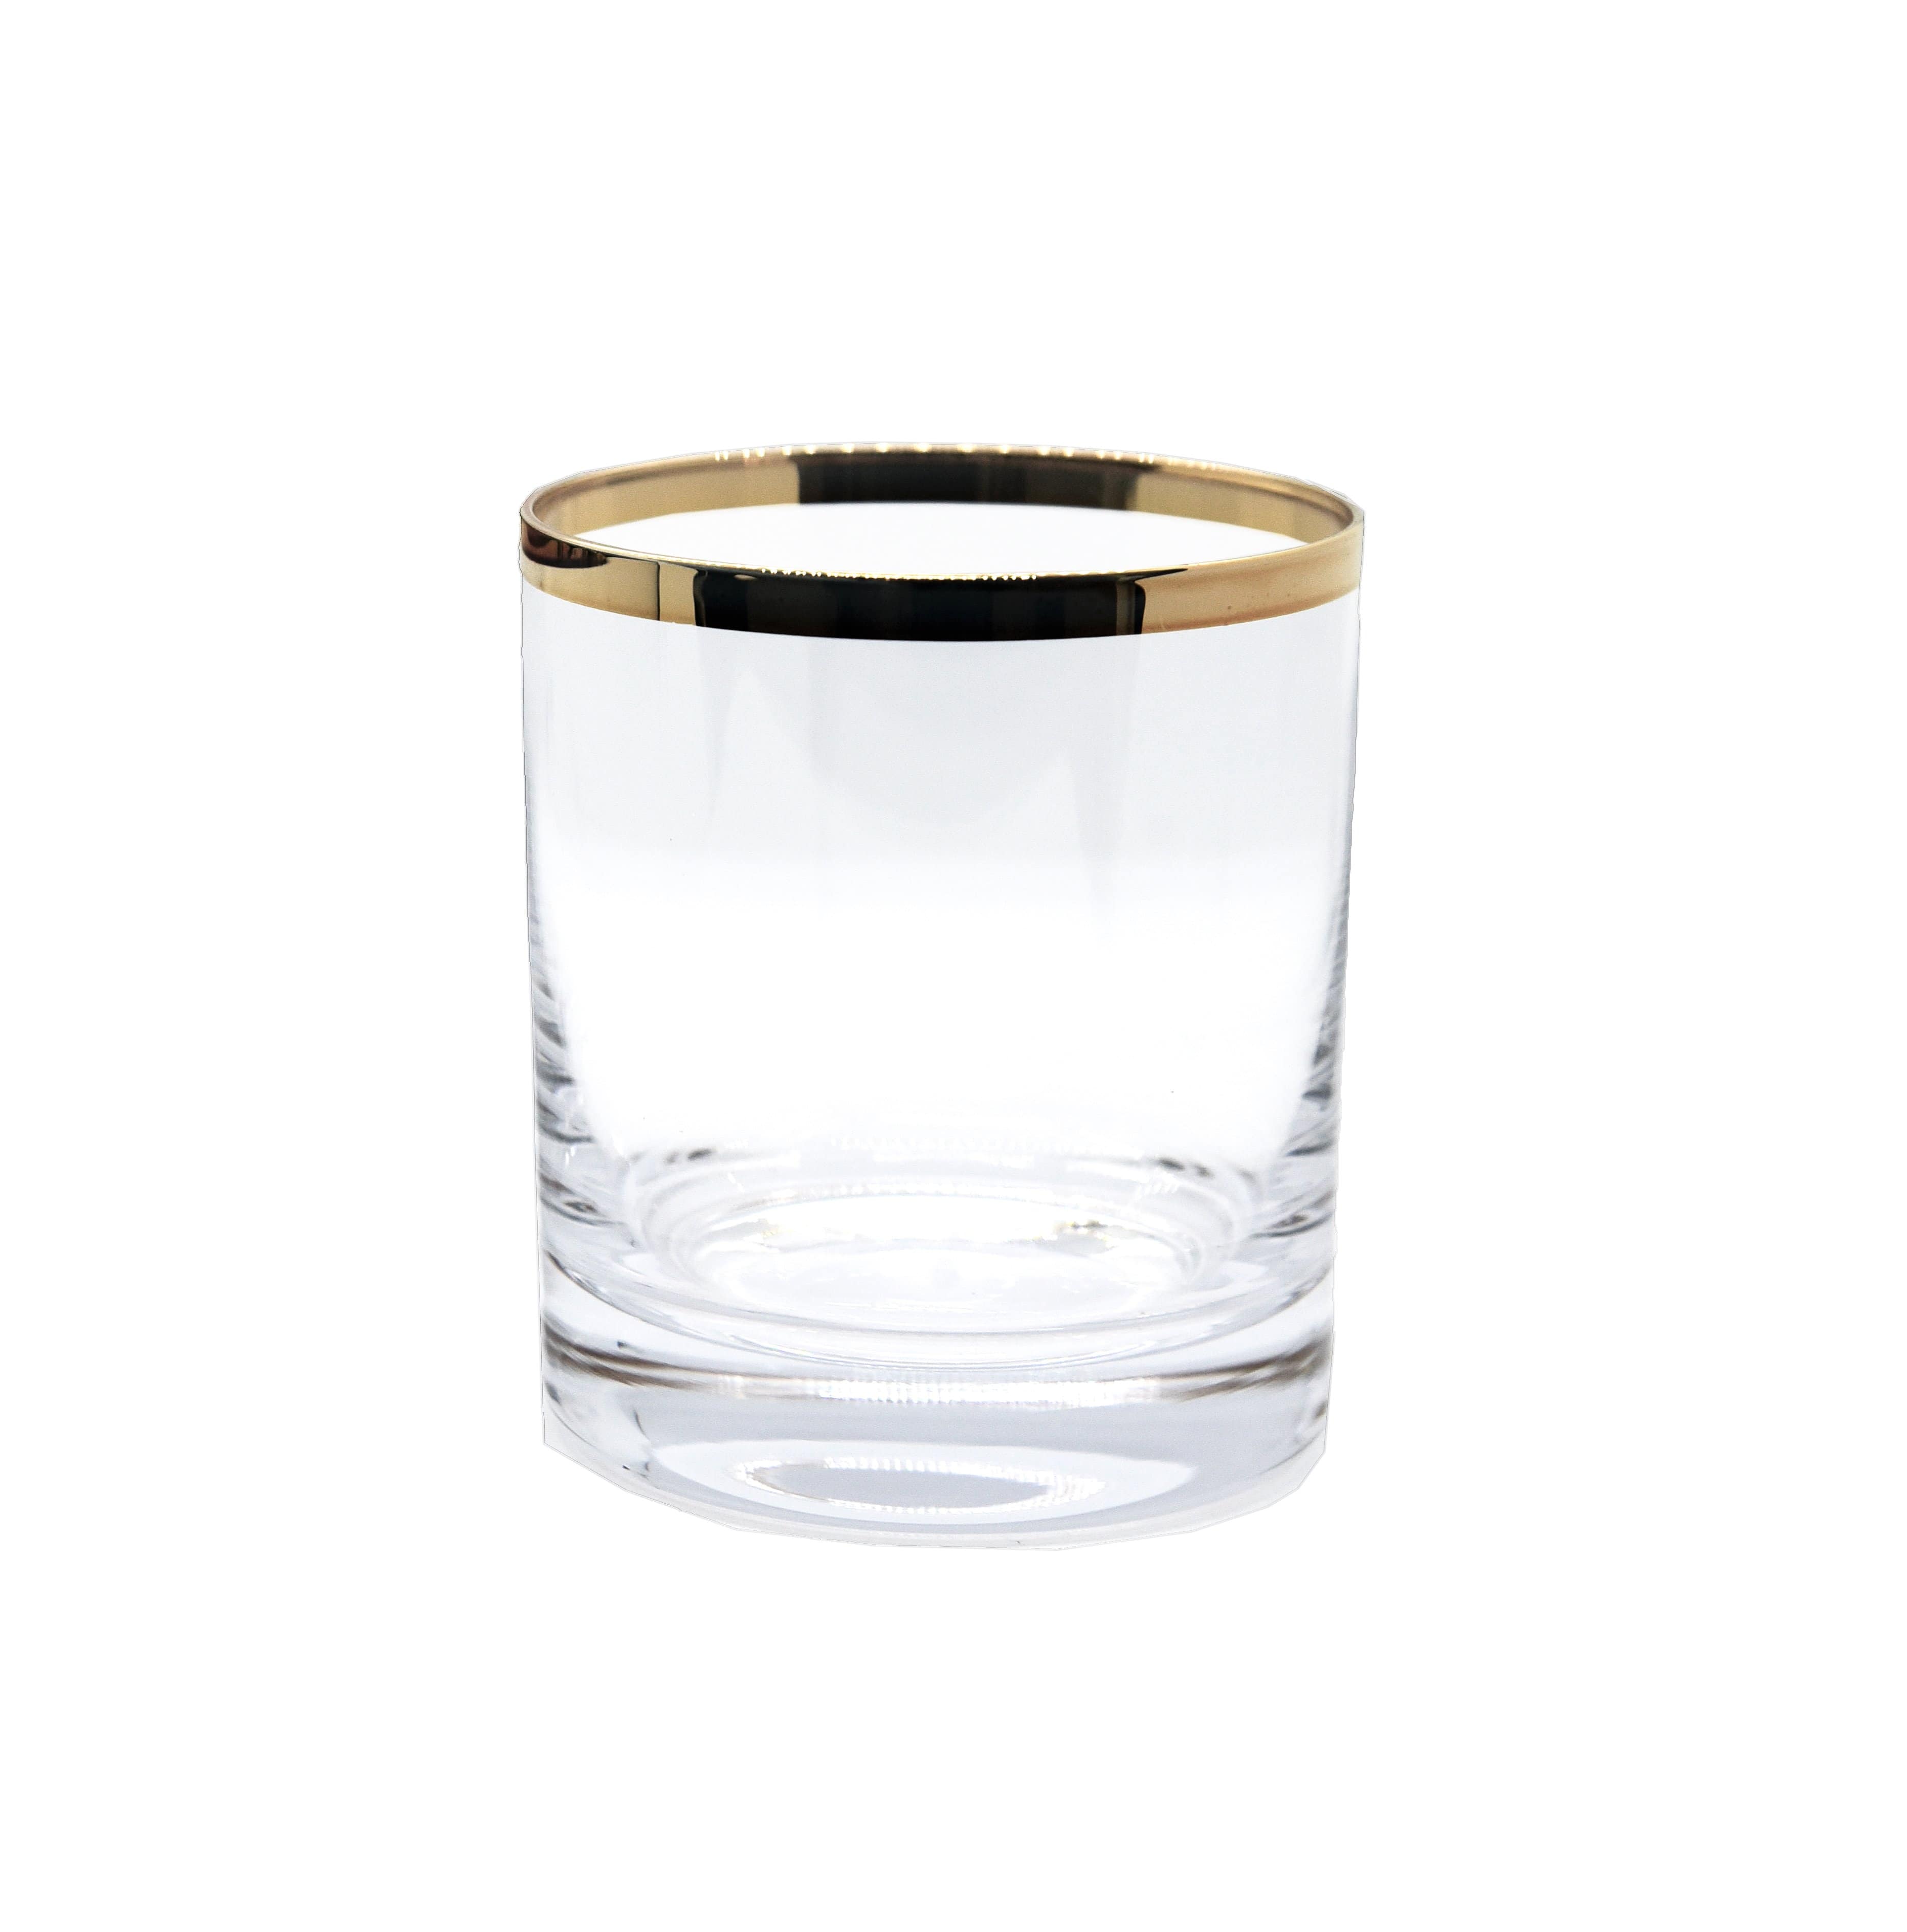 Gold Rim Whisky Glass - Set of 2